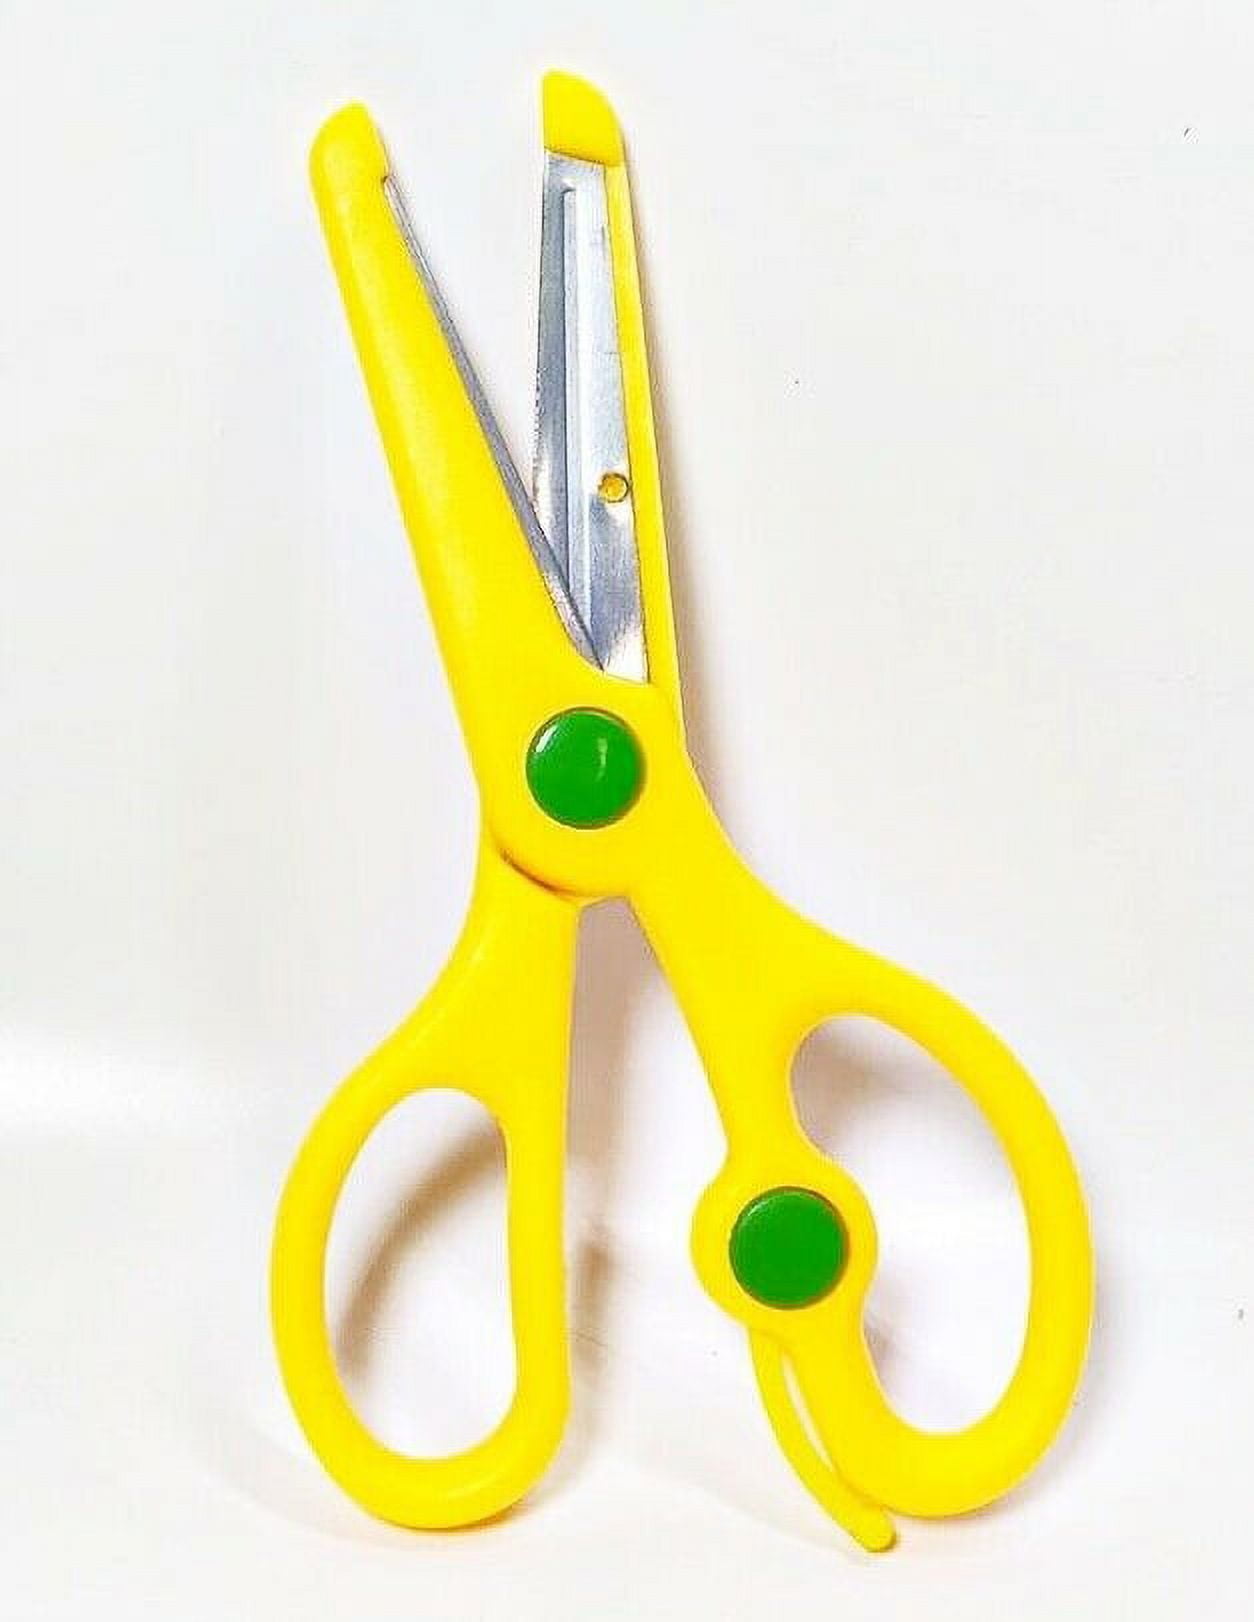 Ausyst Kitchen Utensils Quality Safety Scissors Paper Cutting Plastic Scissors Children's Handmade Toys Clearance, Size: 7.48*5.51*0.75